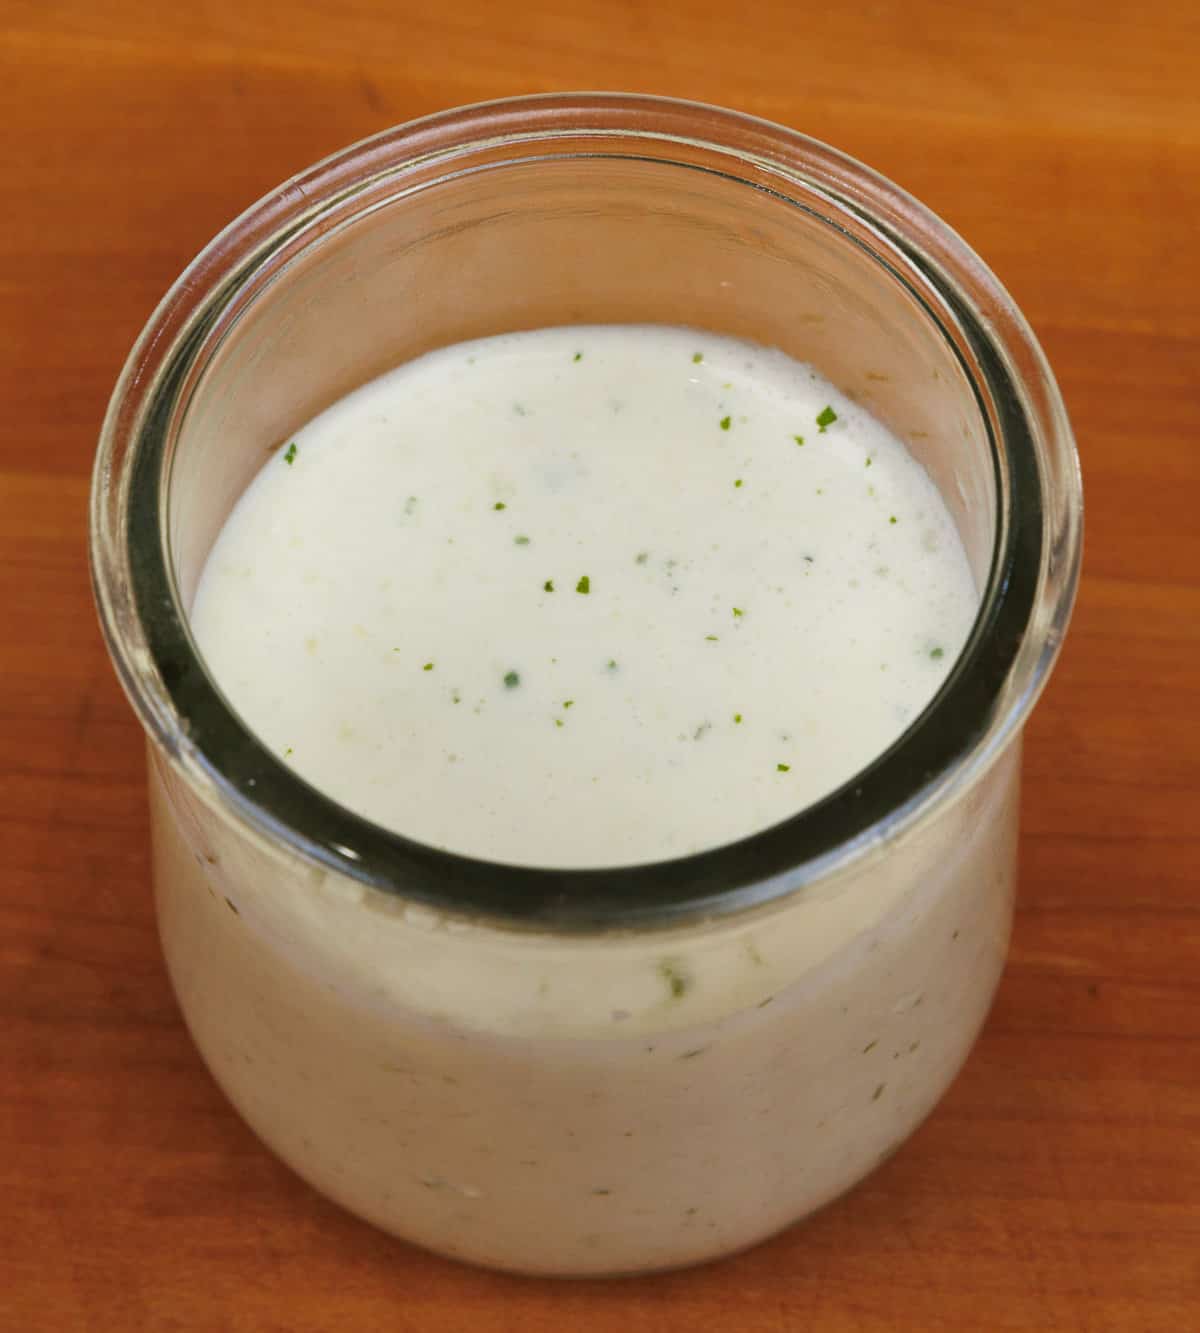 a small clear jar of tzatziki sauce